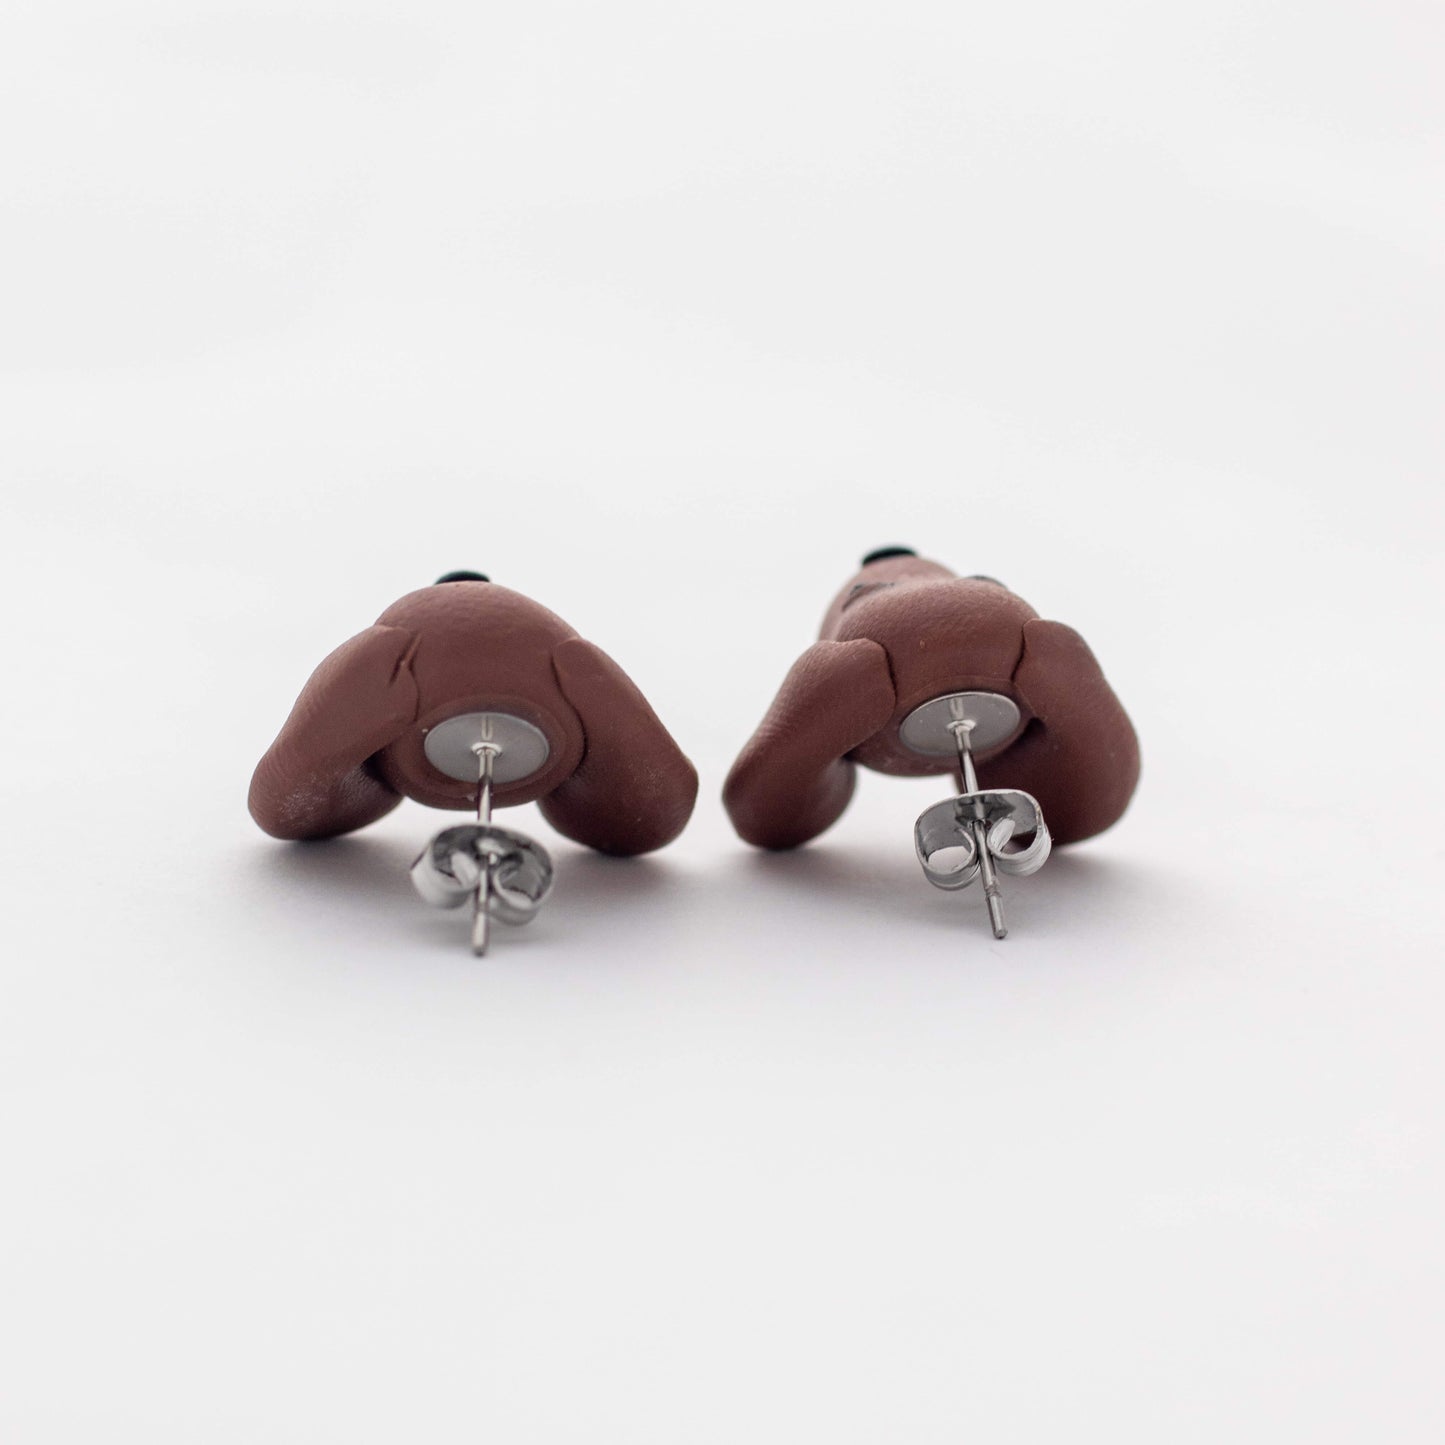 Handmade polymer clay Dachshund stud earrings showing surgical steel backs